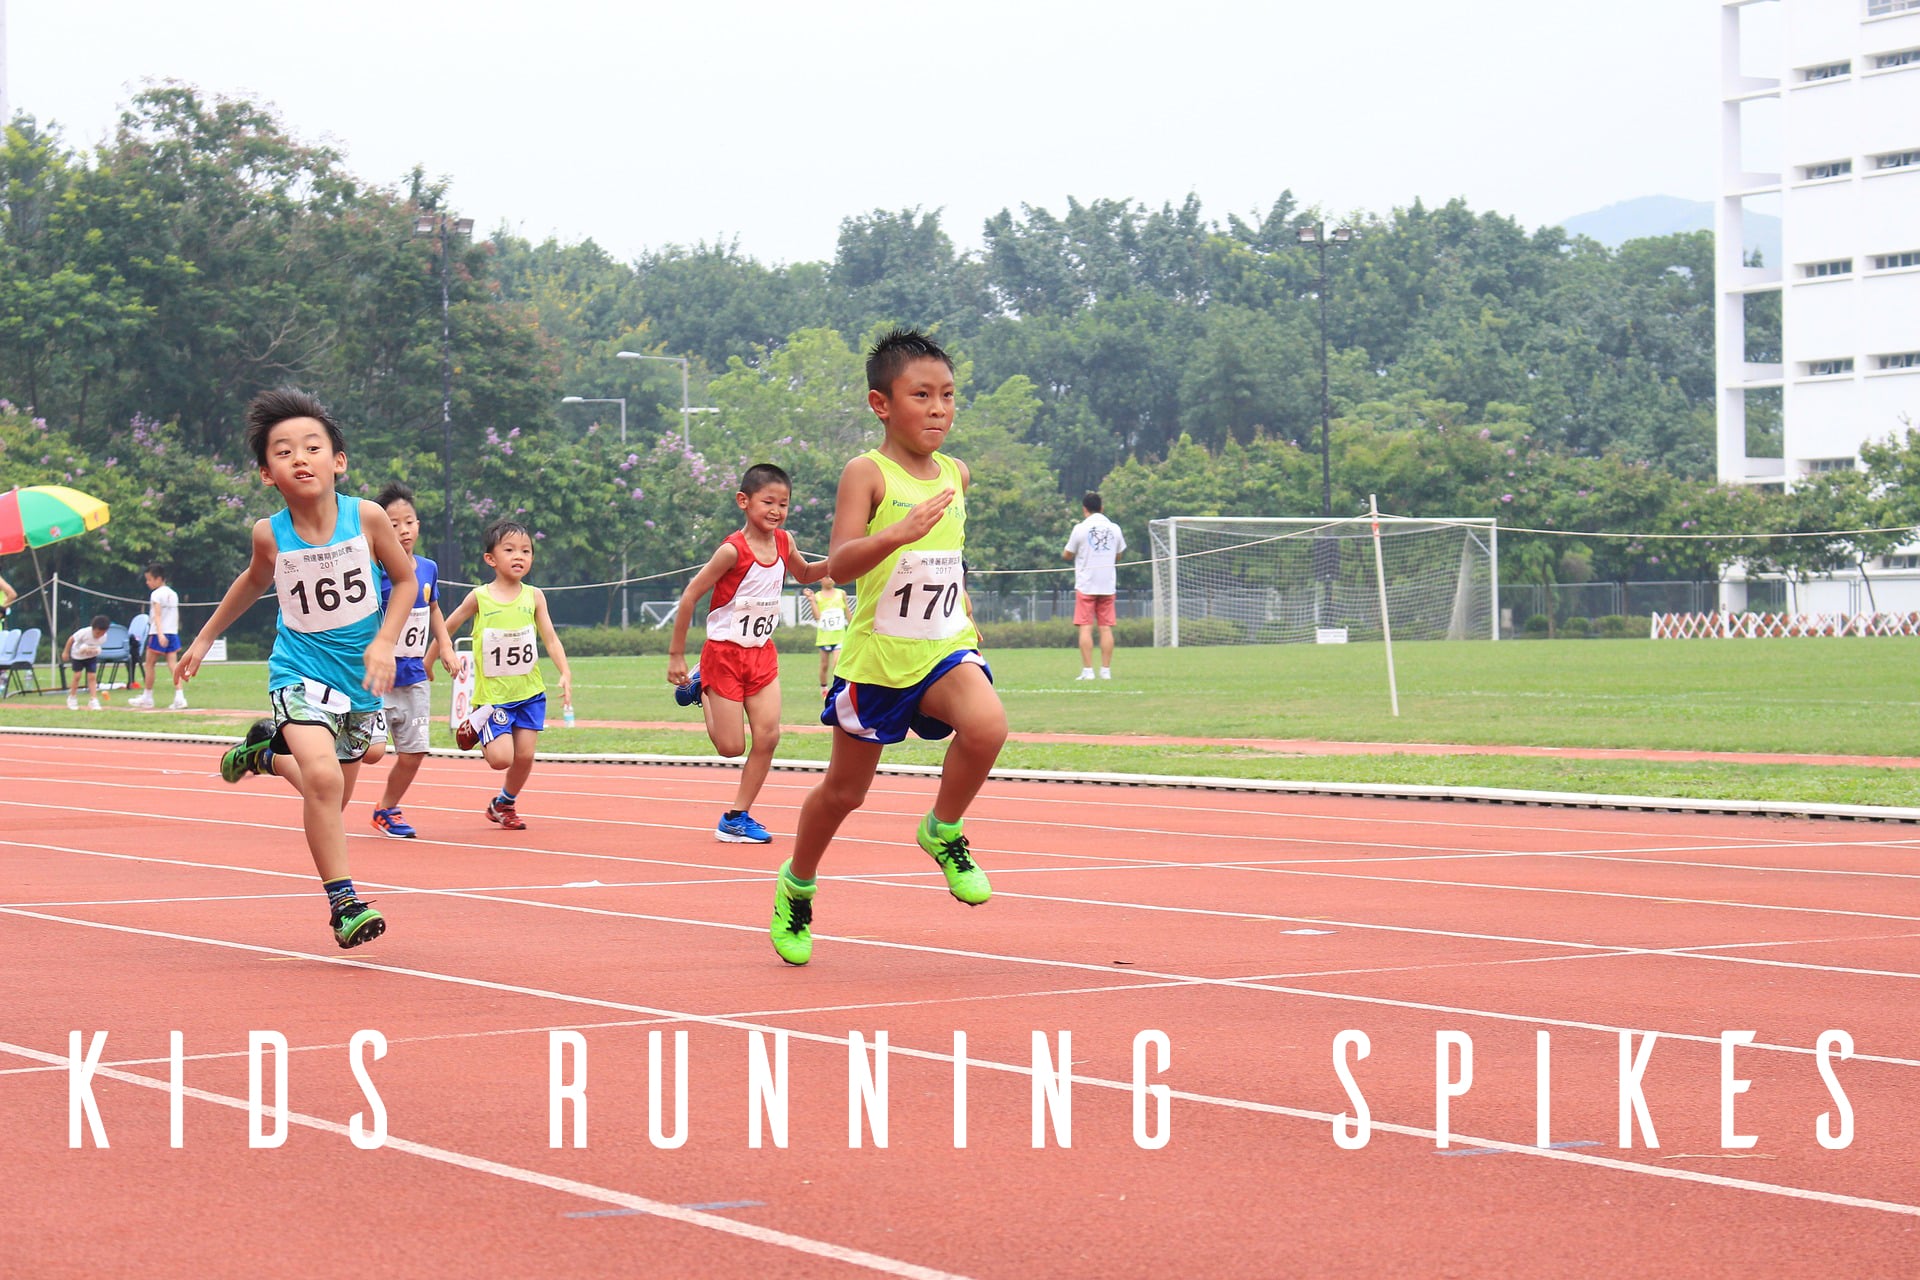 All The BEST Kids Running Spikes | Boys 